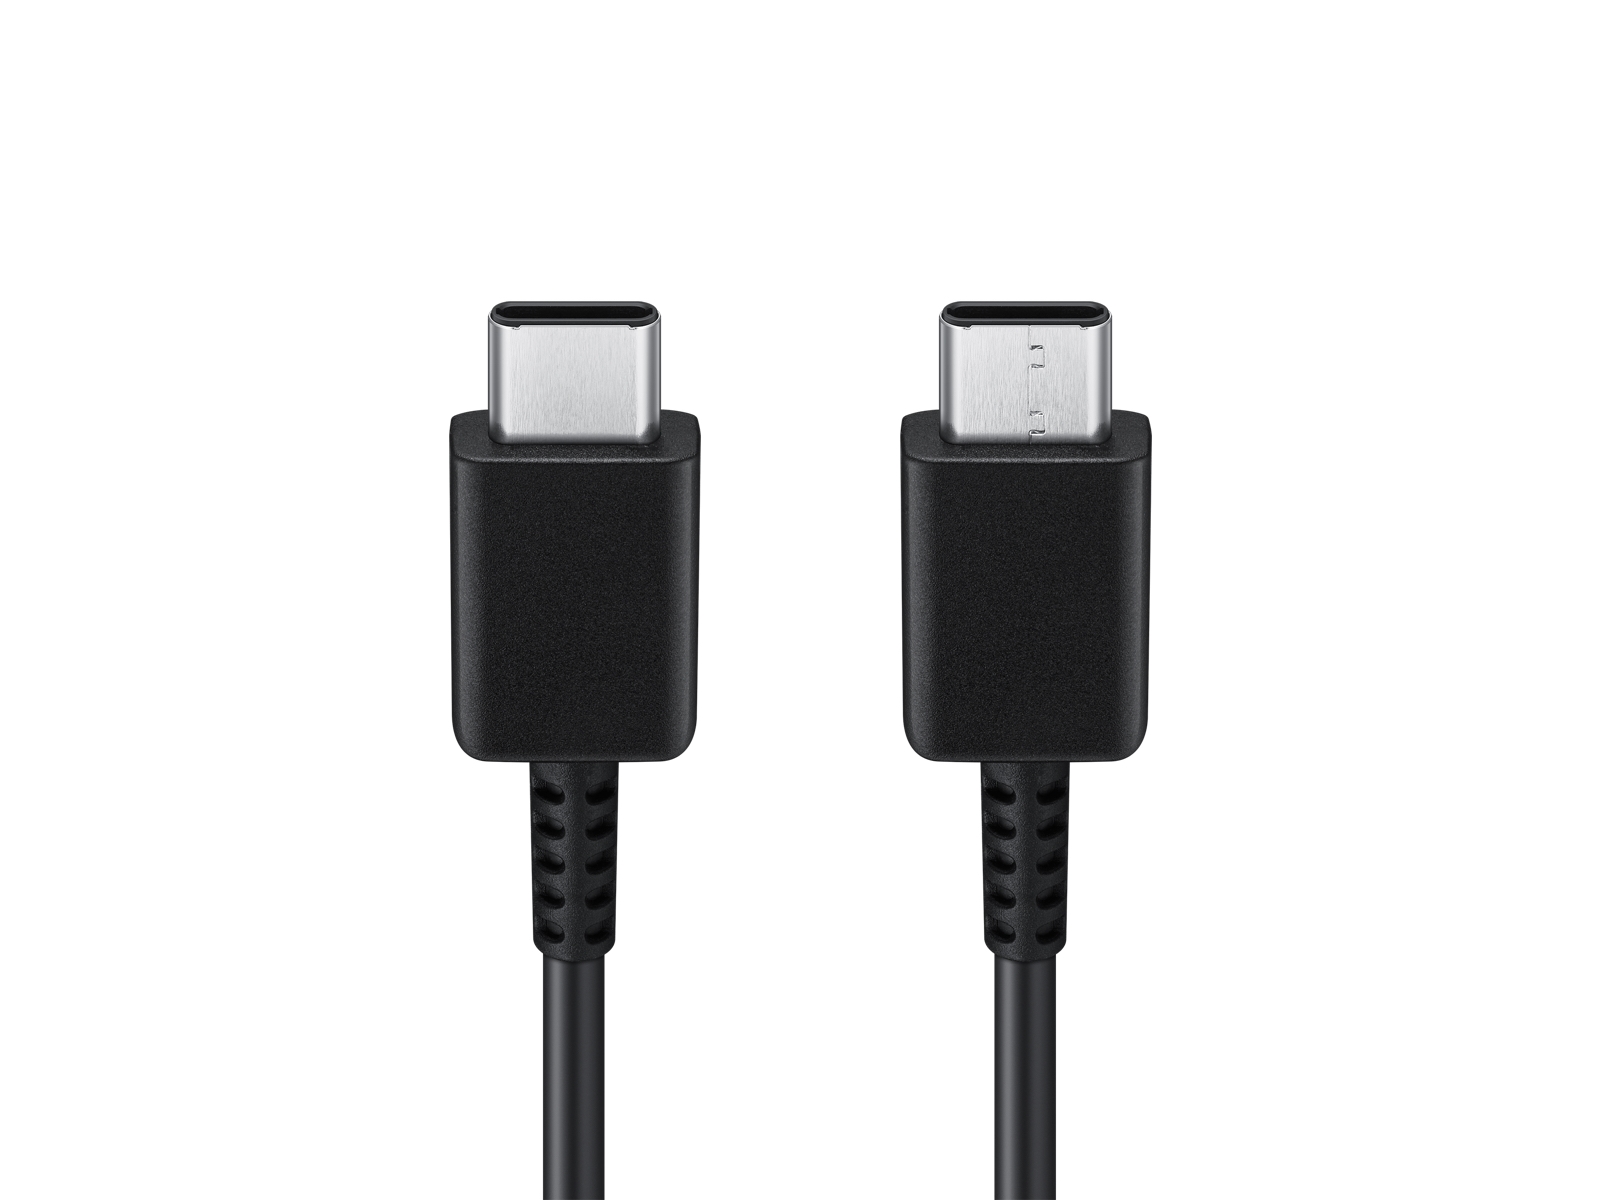 grit Fængsling Ewell USB-C to USB-C Cable, Black Mobile Accessories - EP-DA705BBEGUS | Samsung US